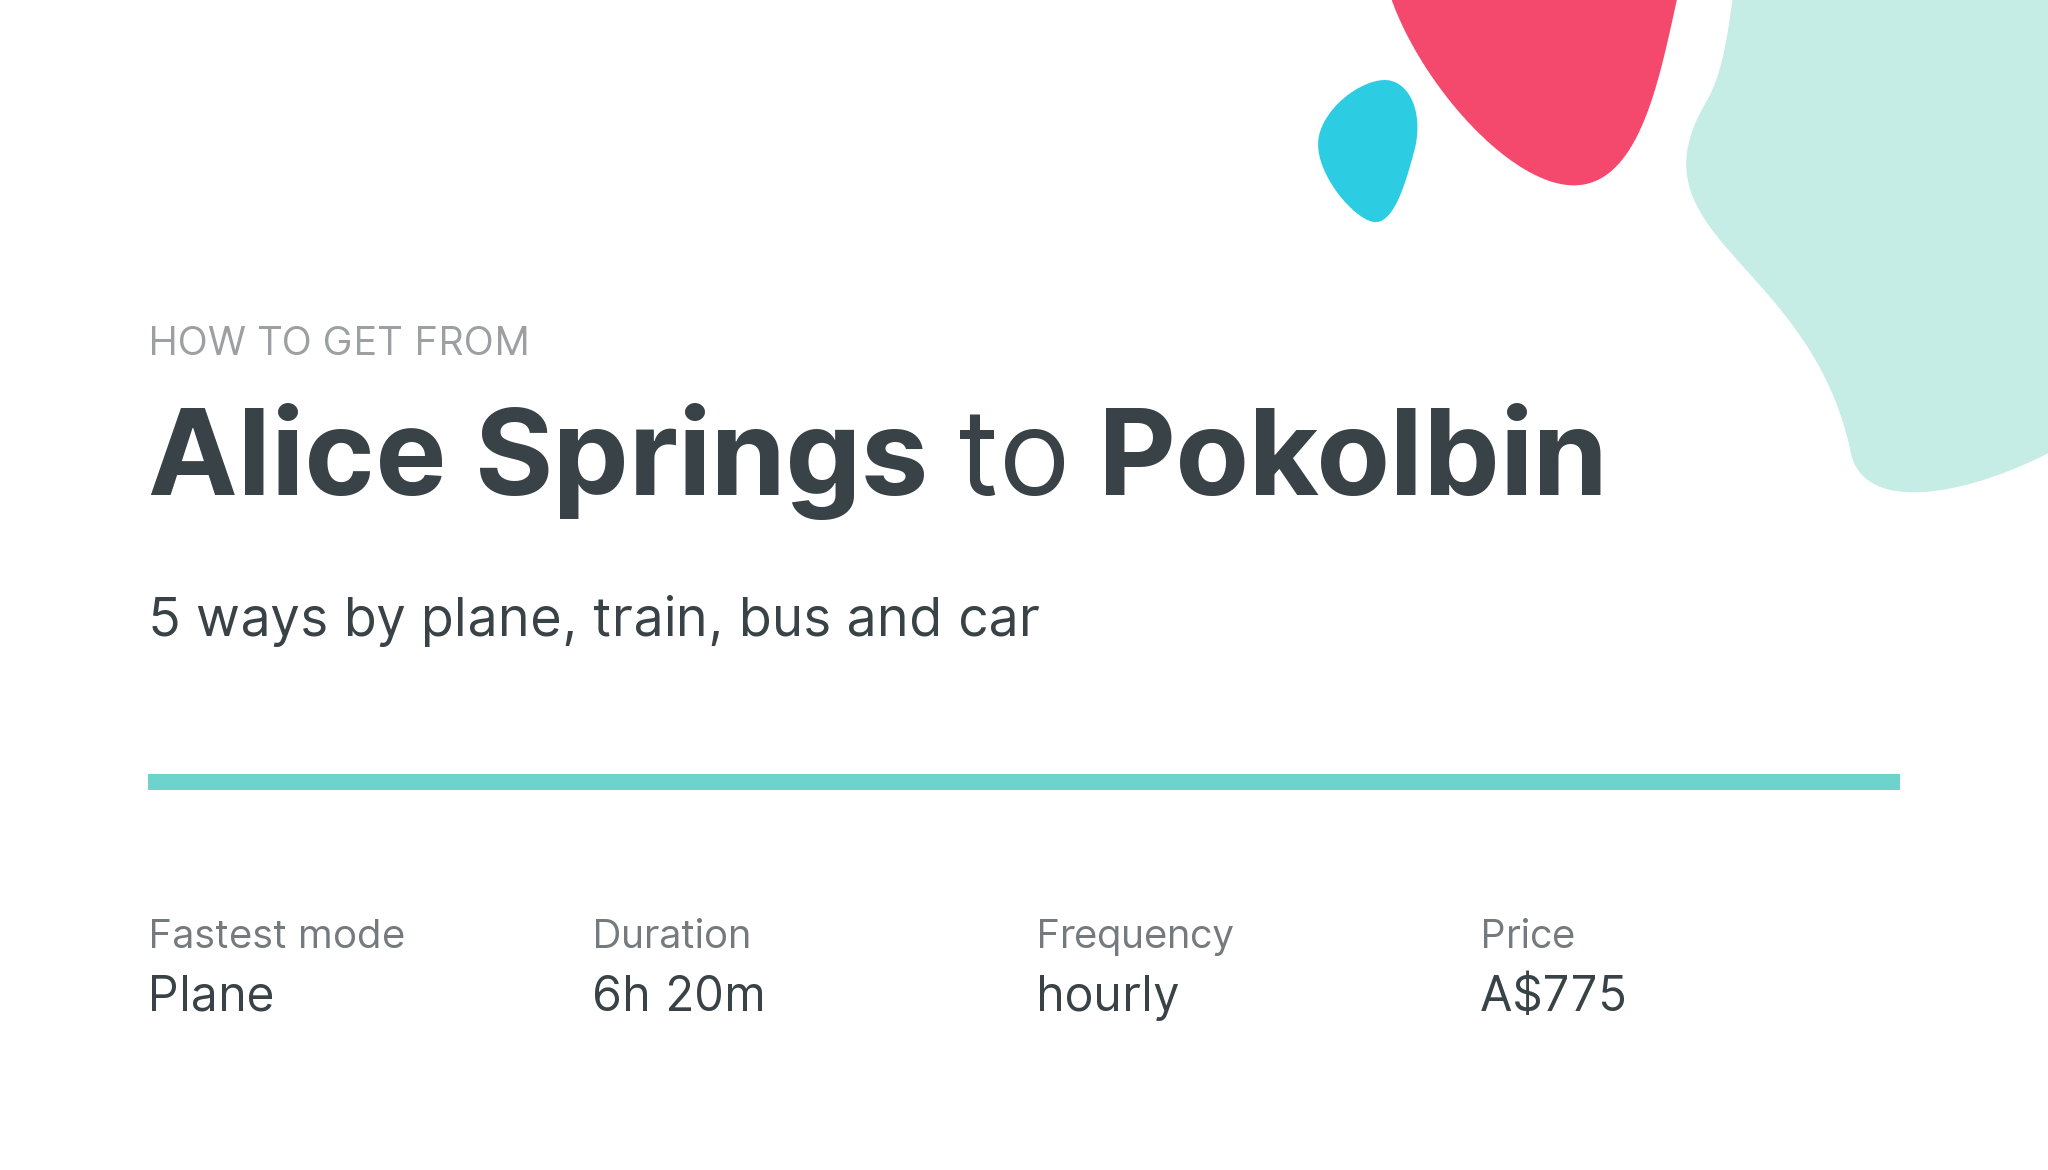 How do I get from Alice Springs to Pokolbin